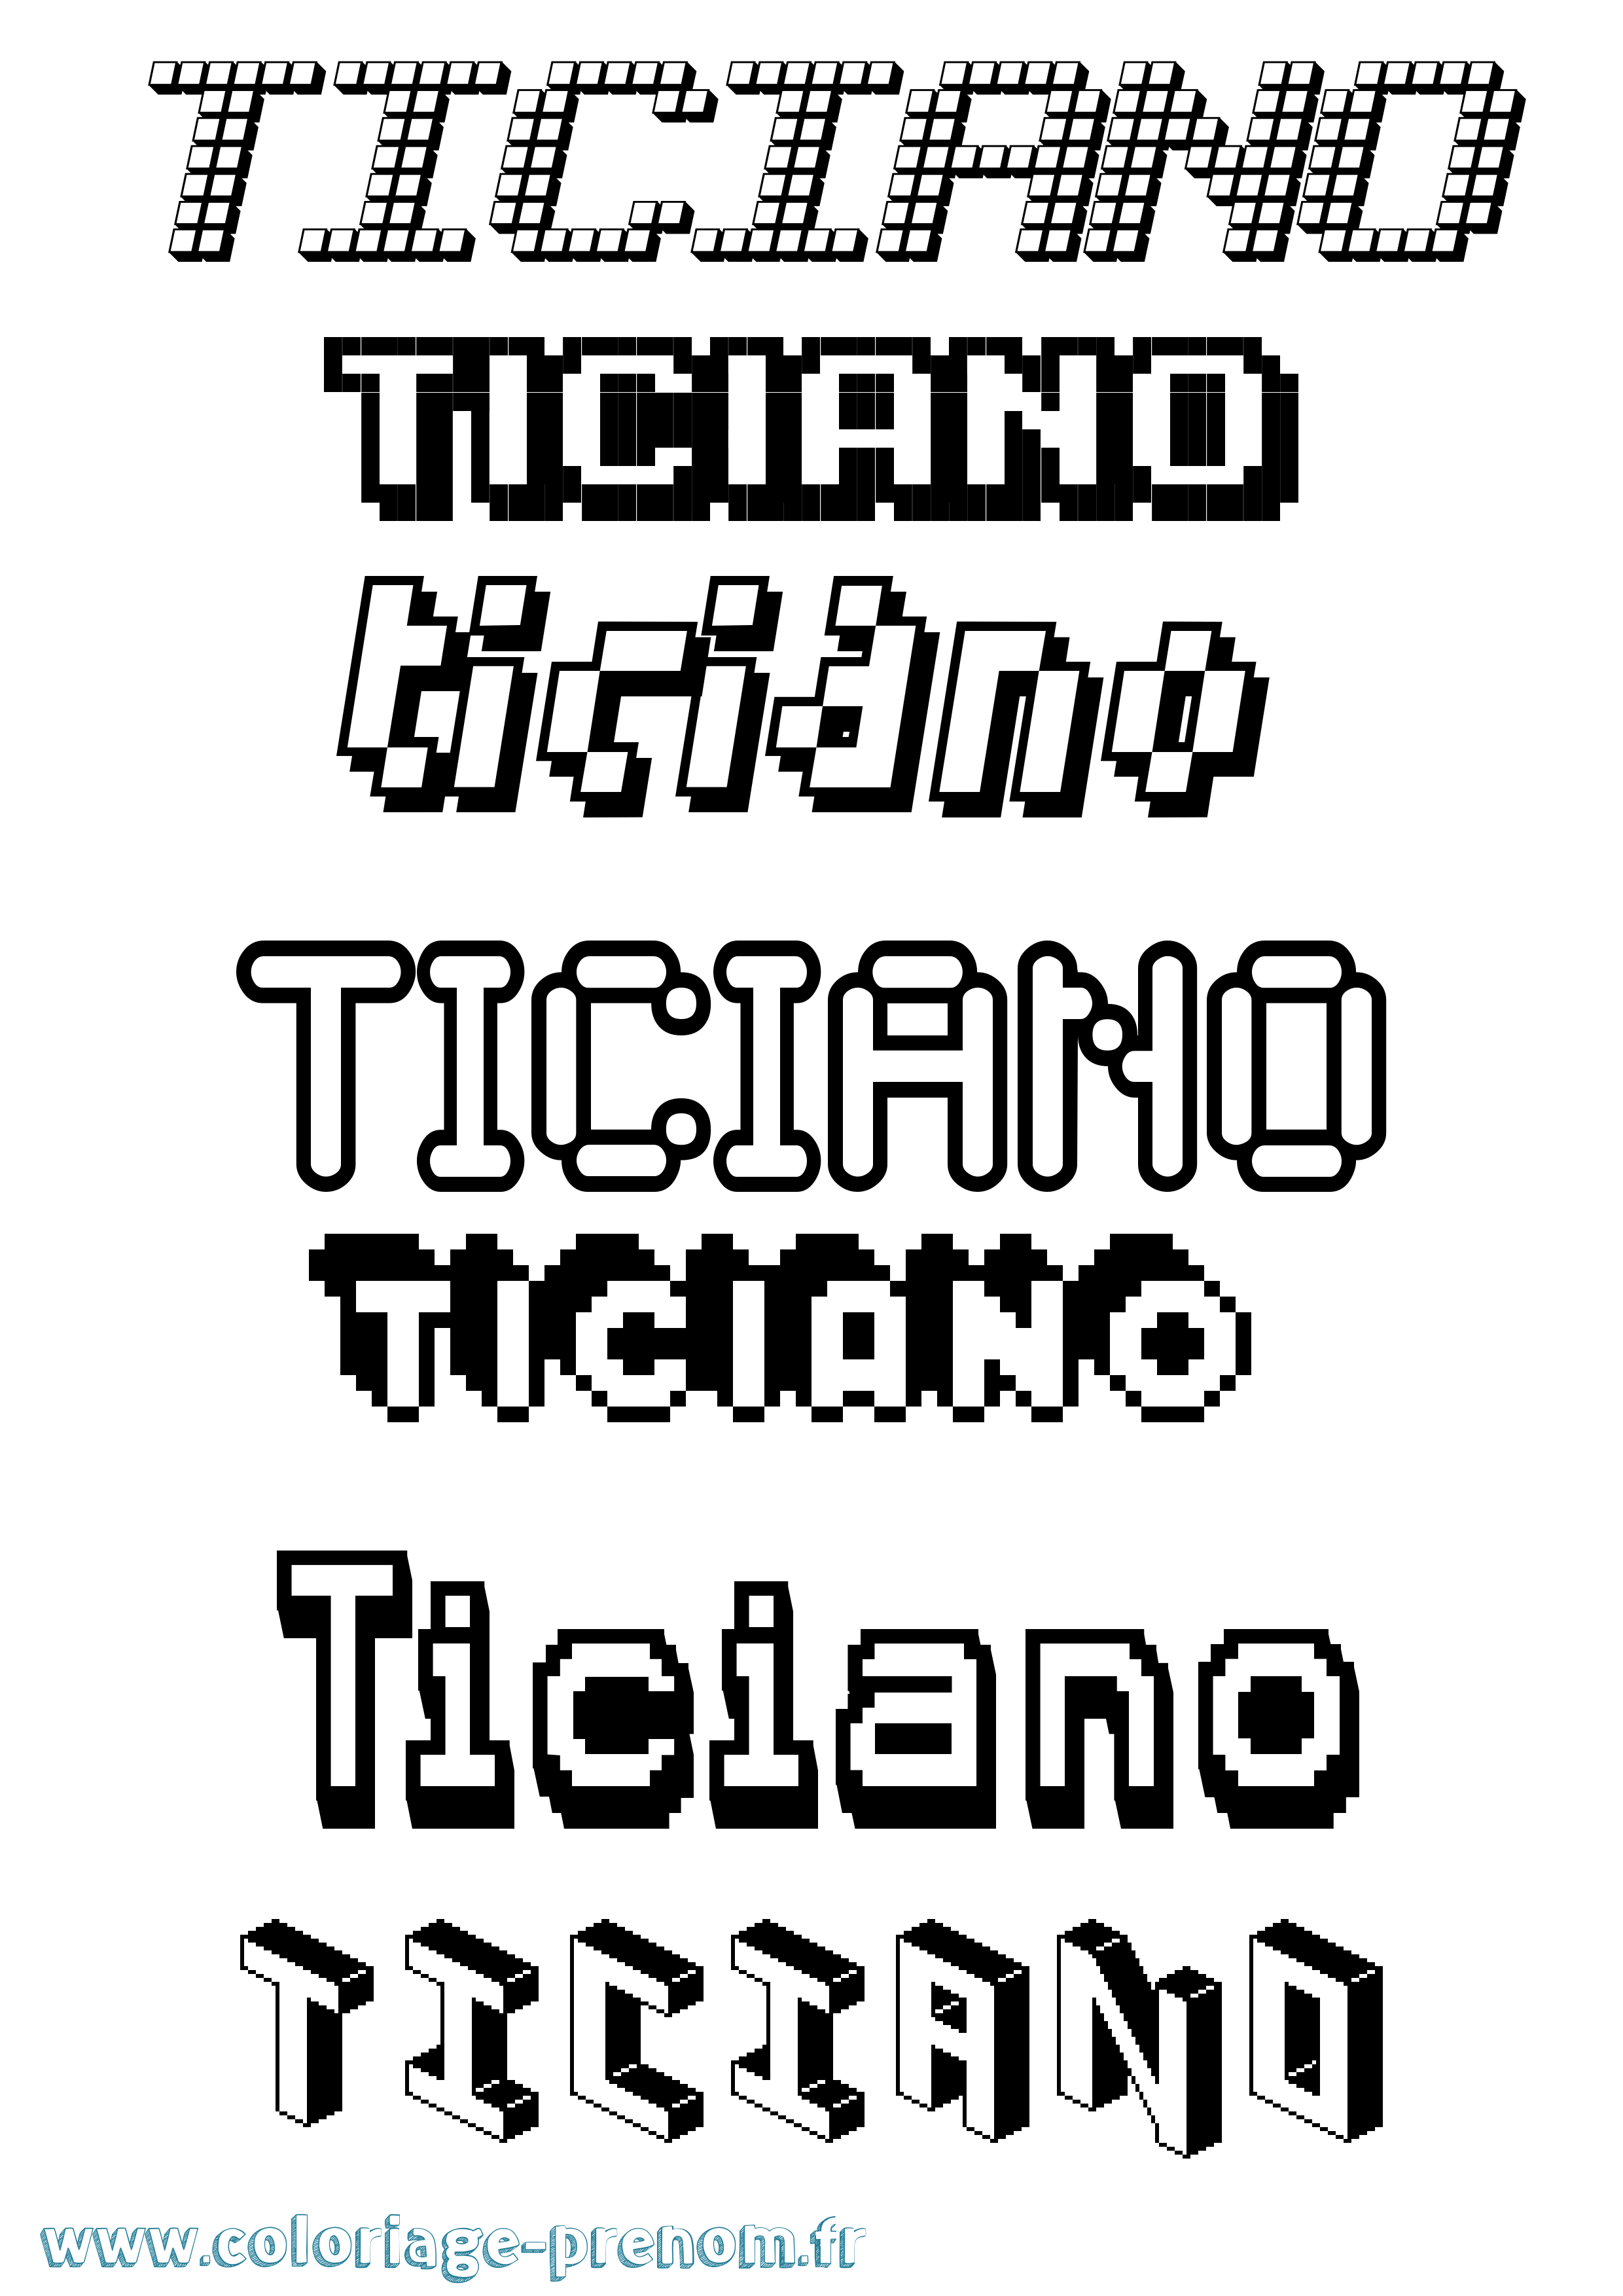 Coloriage prénom Ticiano Pixel